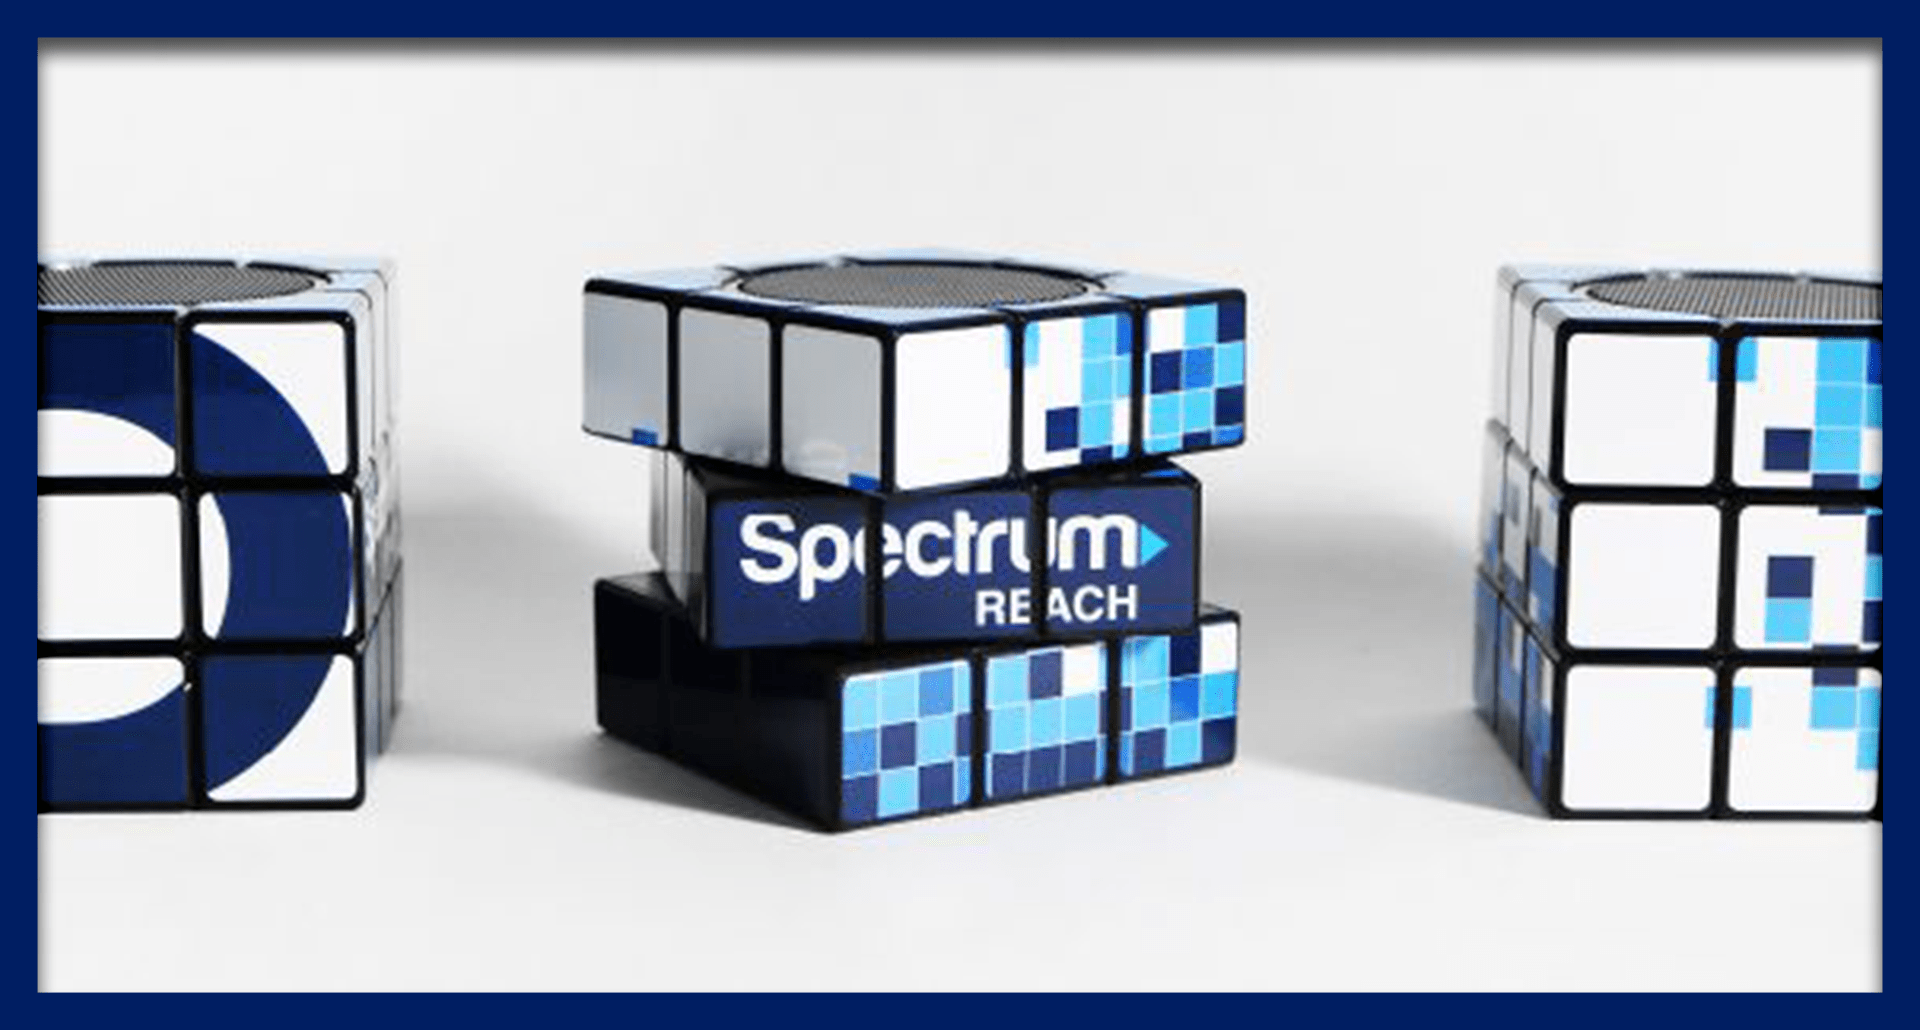 Case Study: Spectrum's Rubik's Cube Speaker